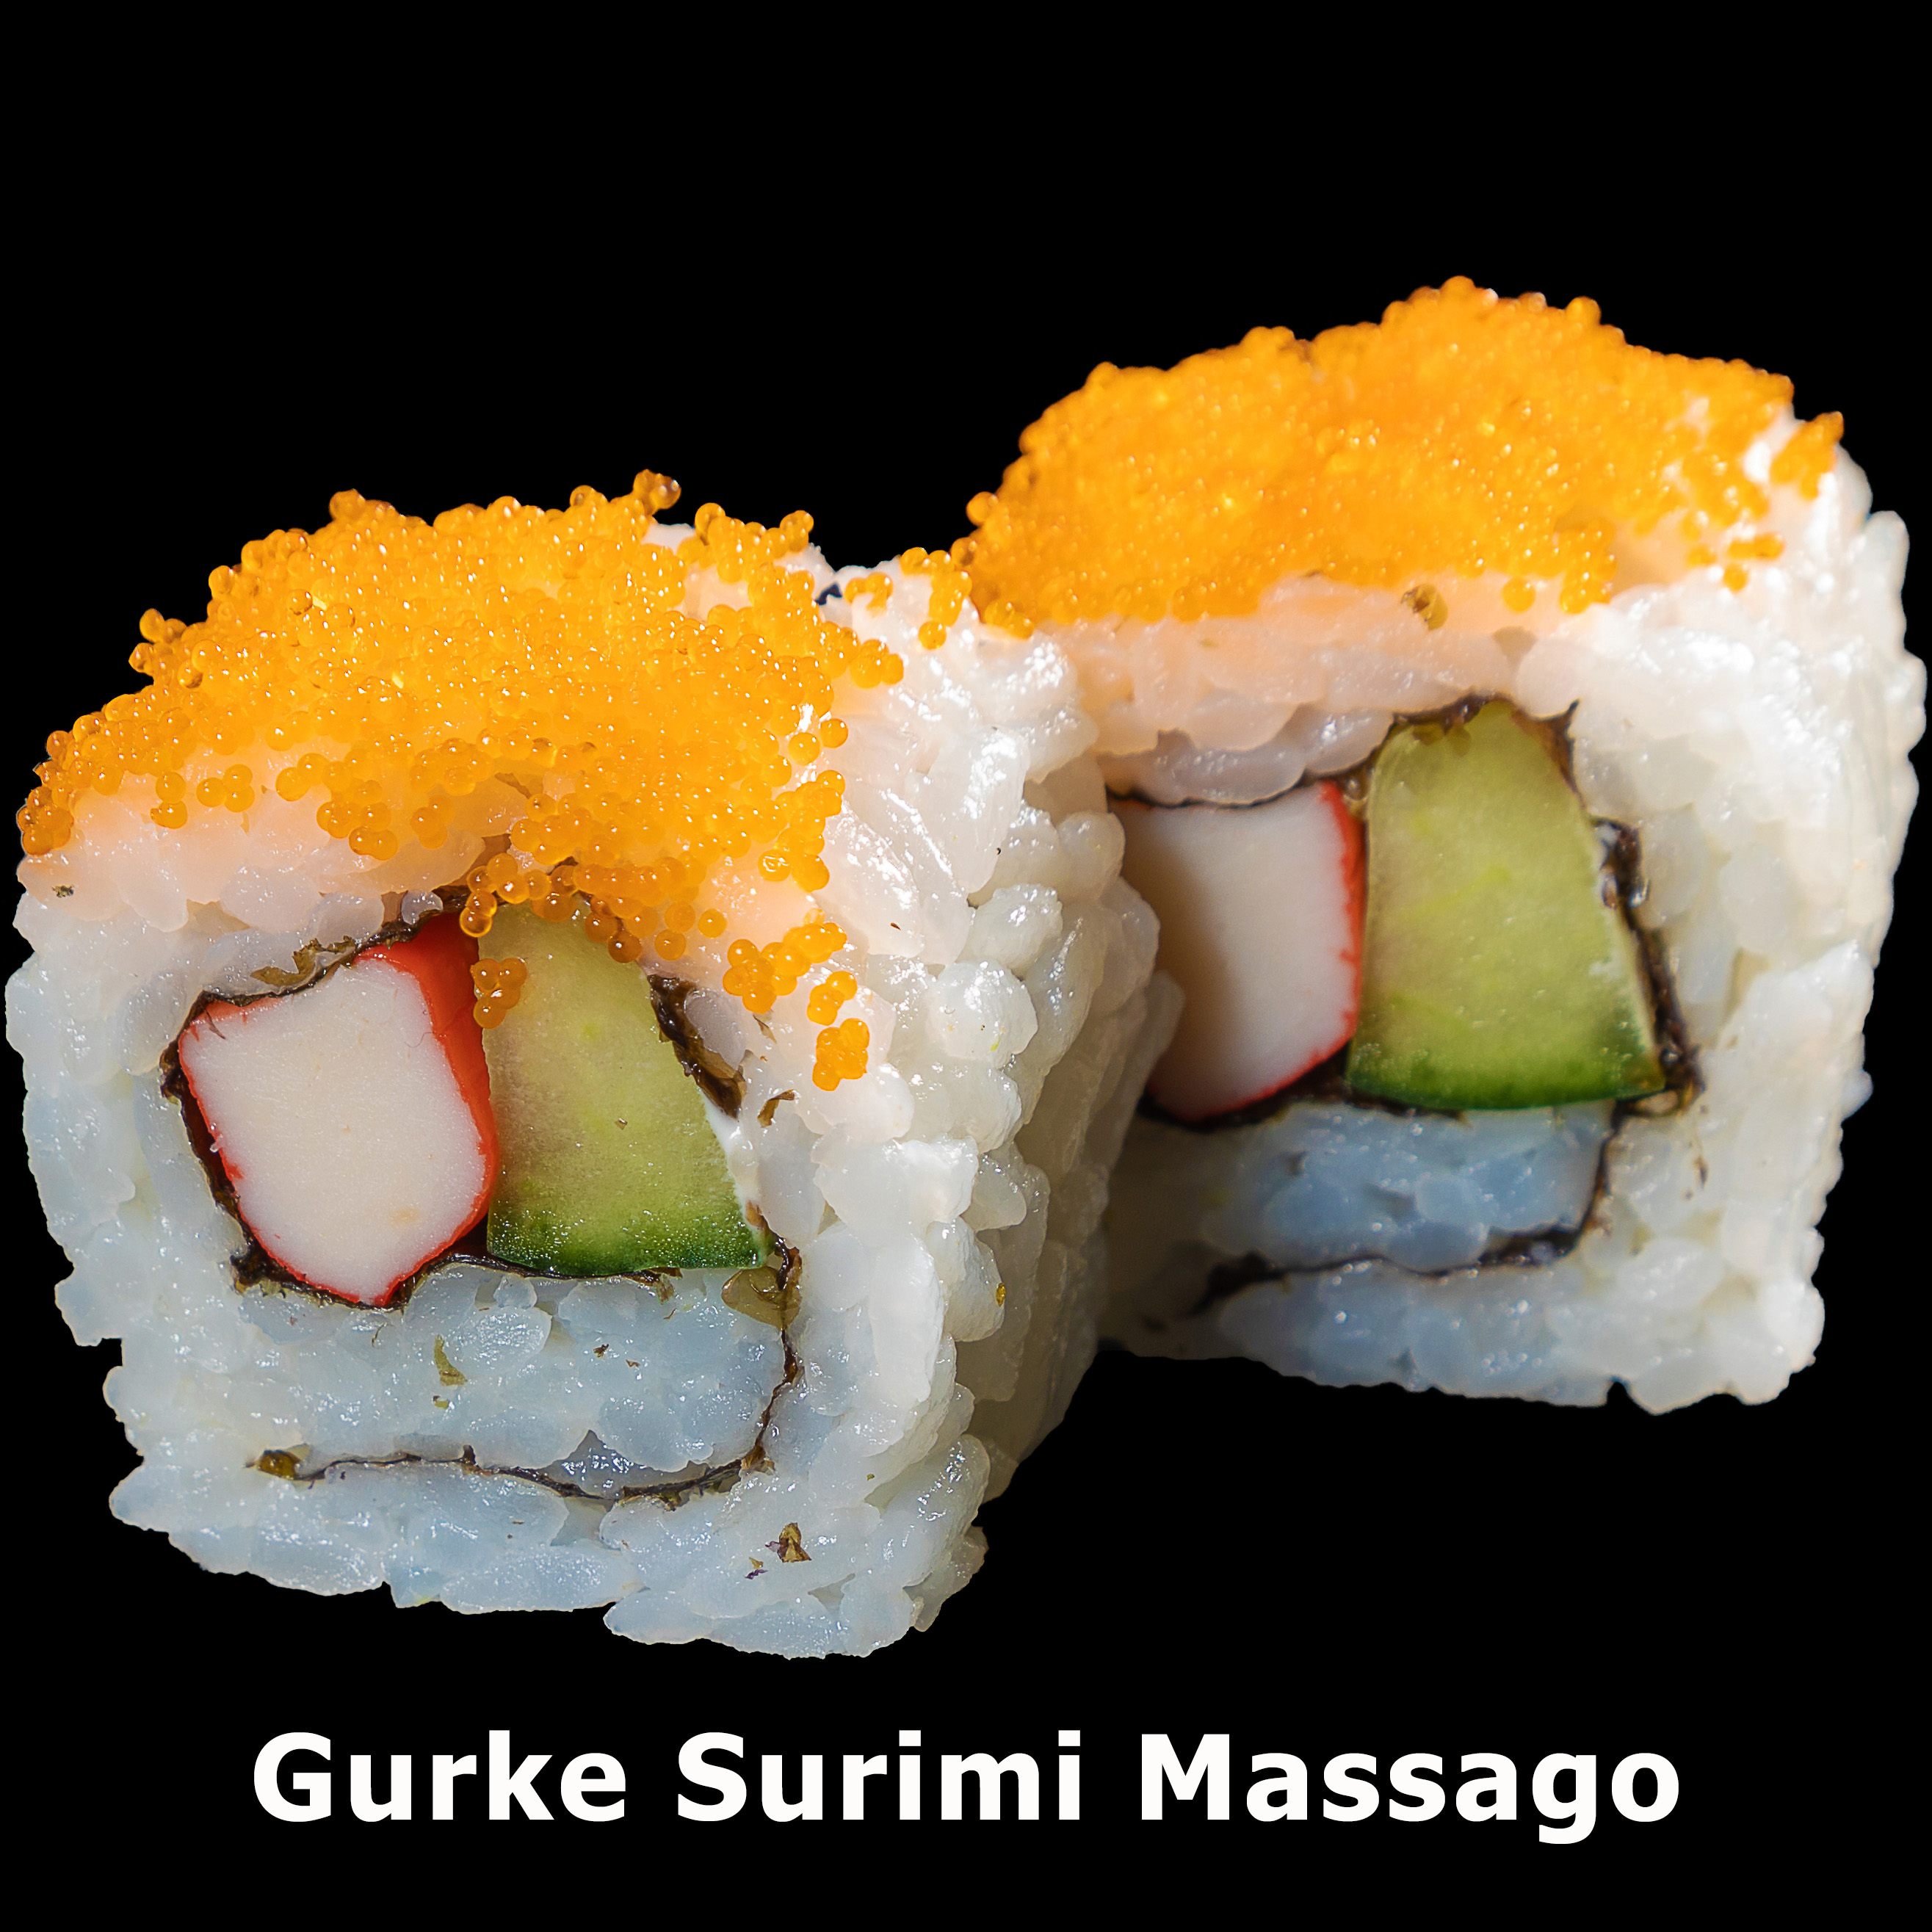 38. Gurke Surimi Massago orange